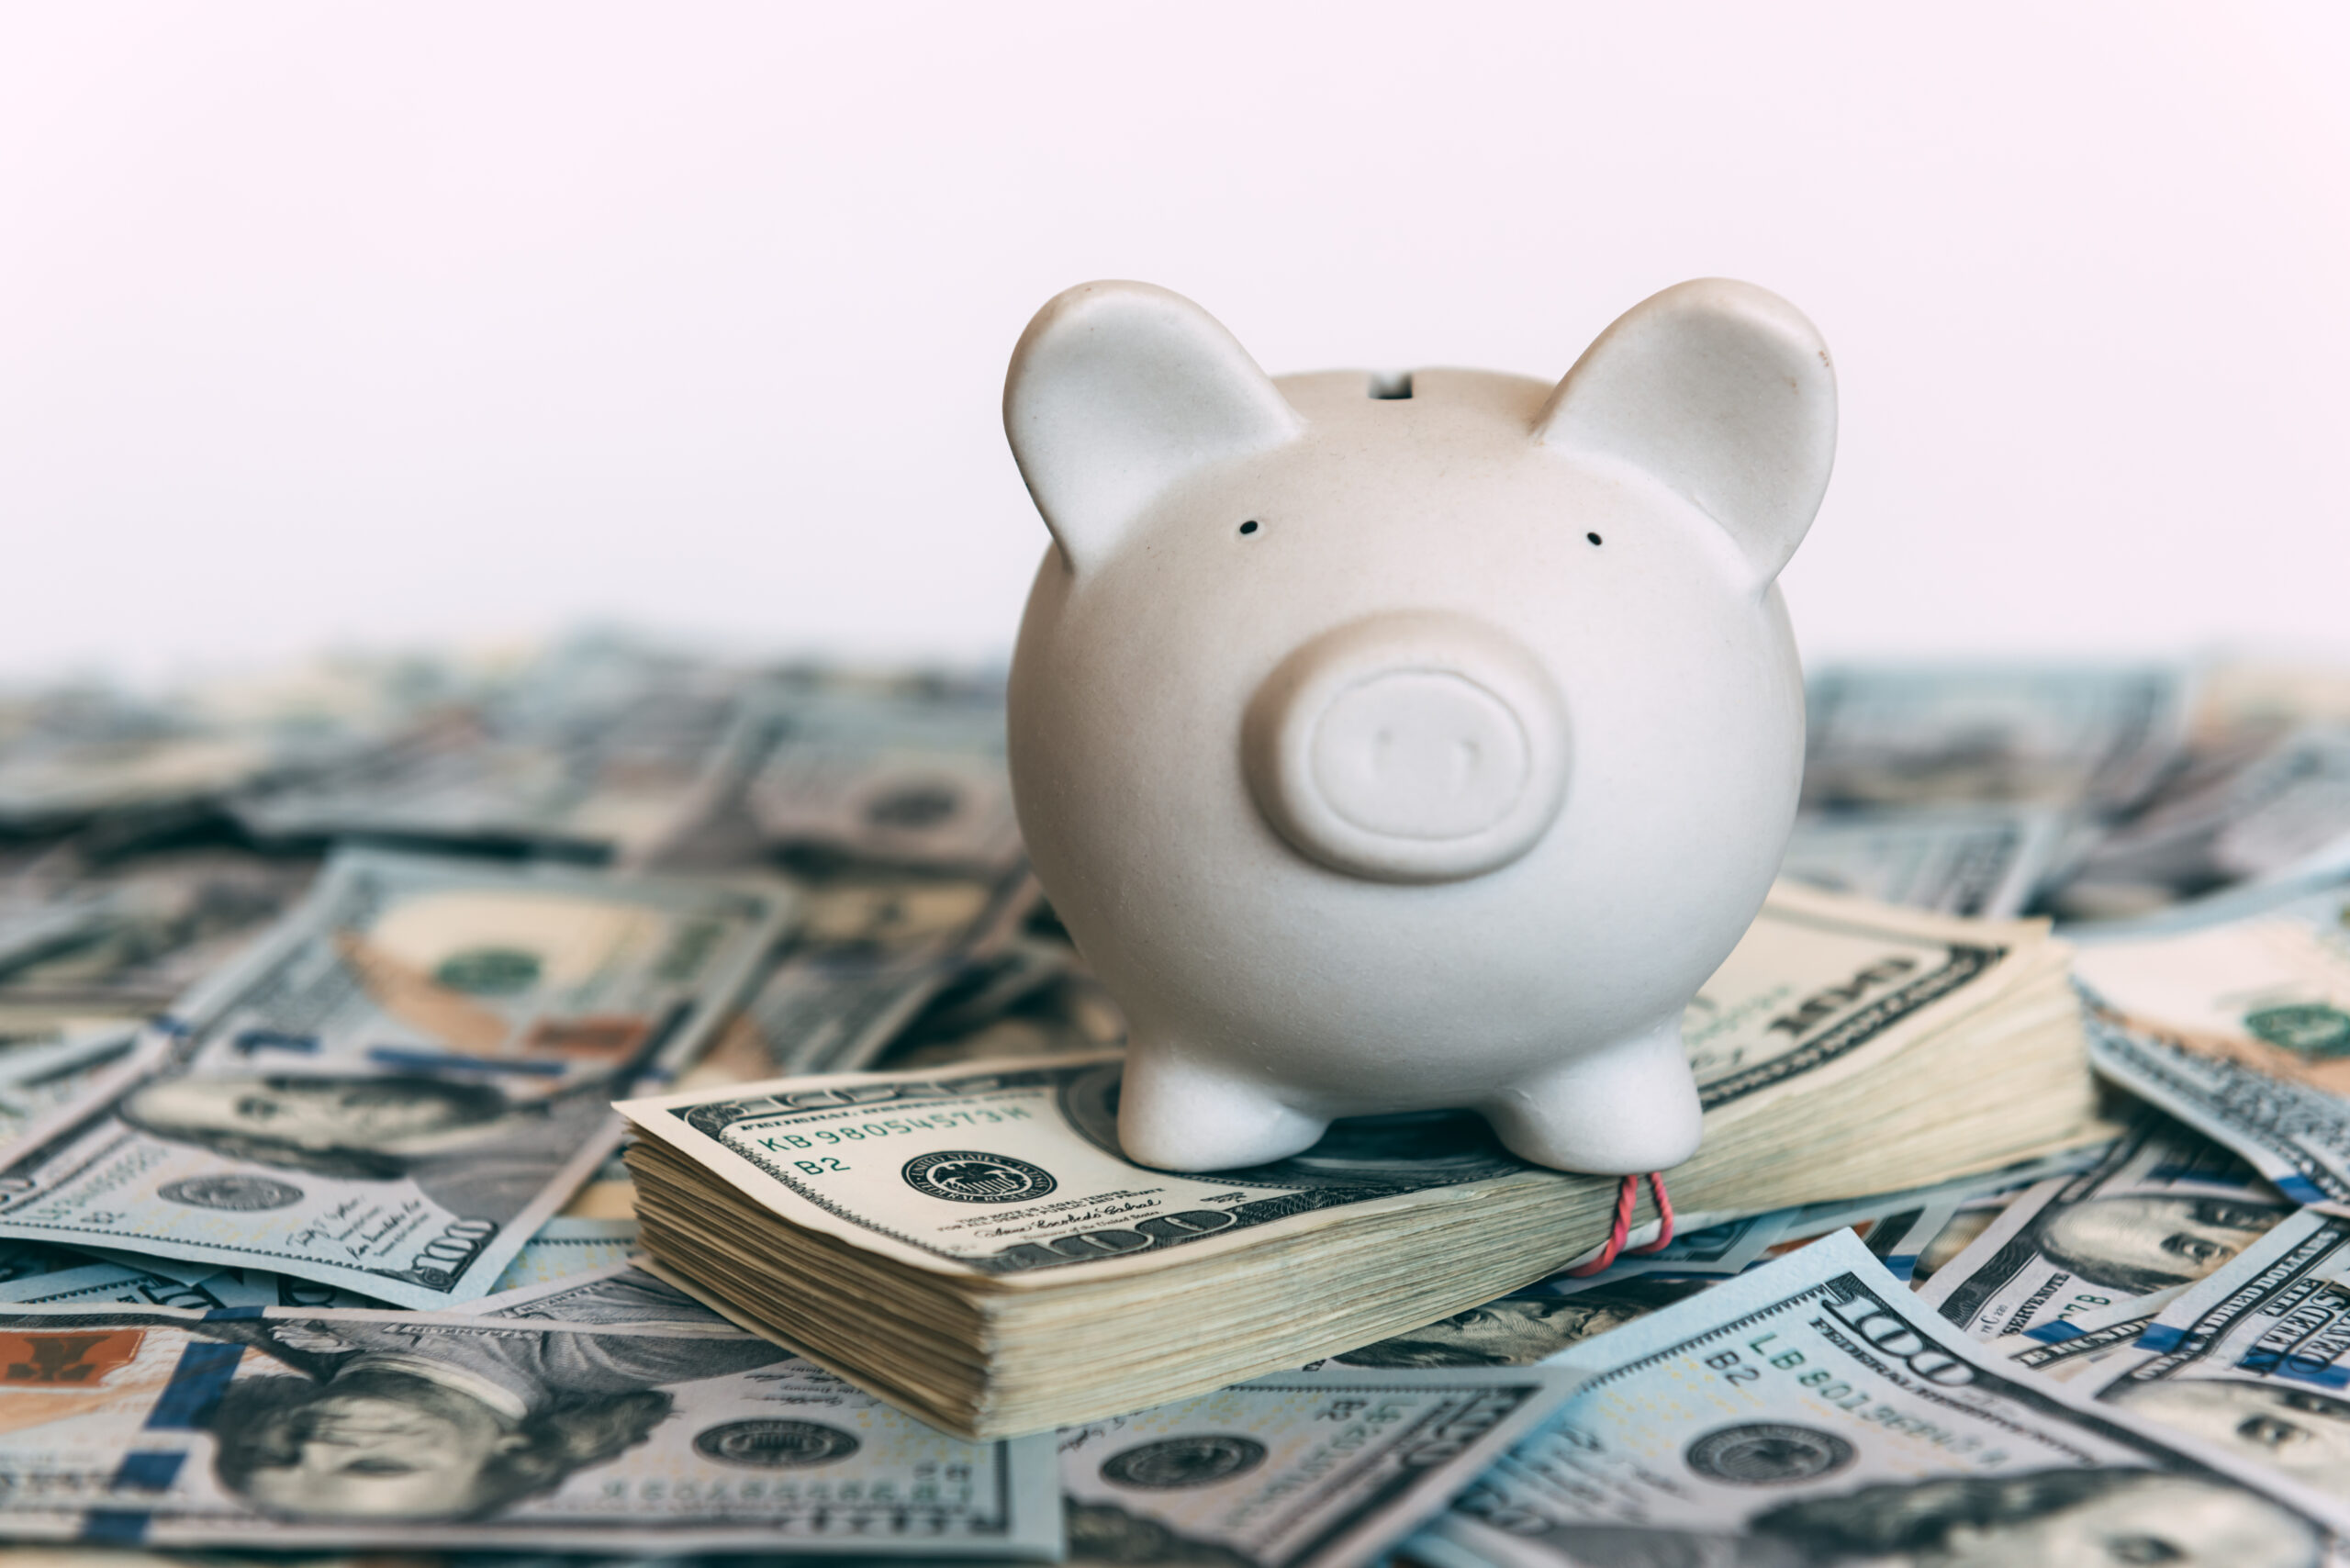 Piggy moneybox with dollar cash closeup. Financial concept